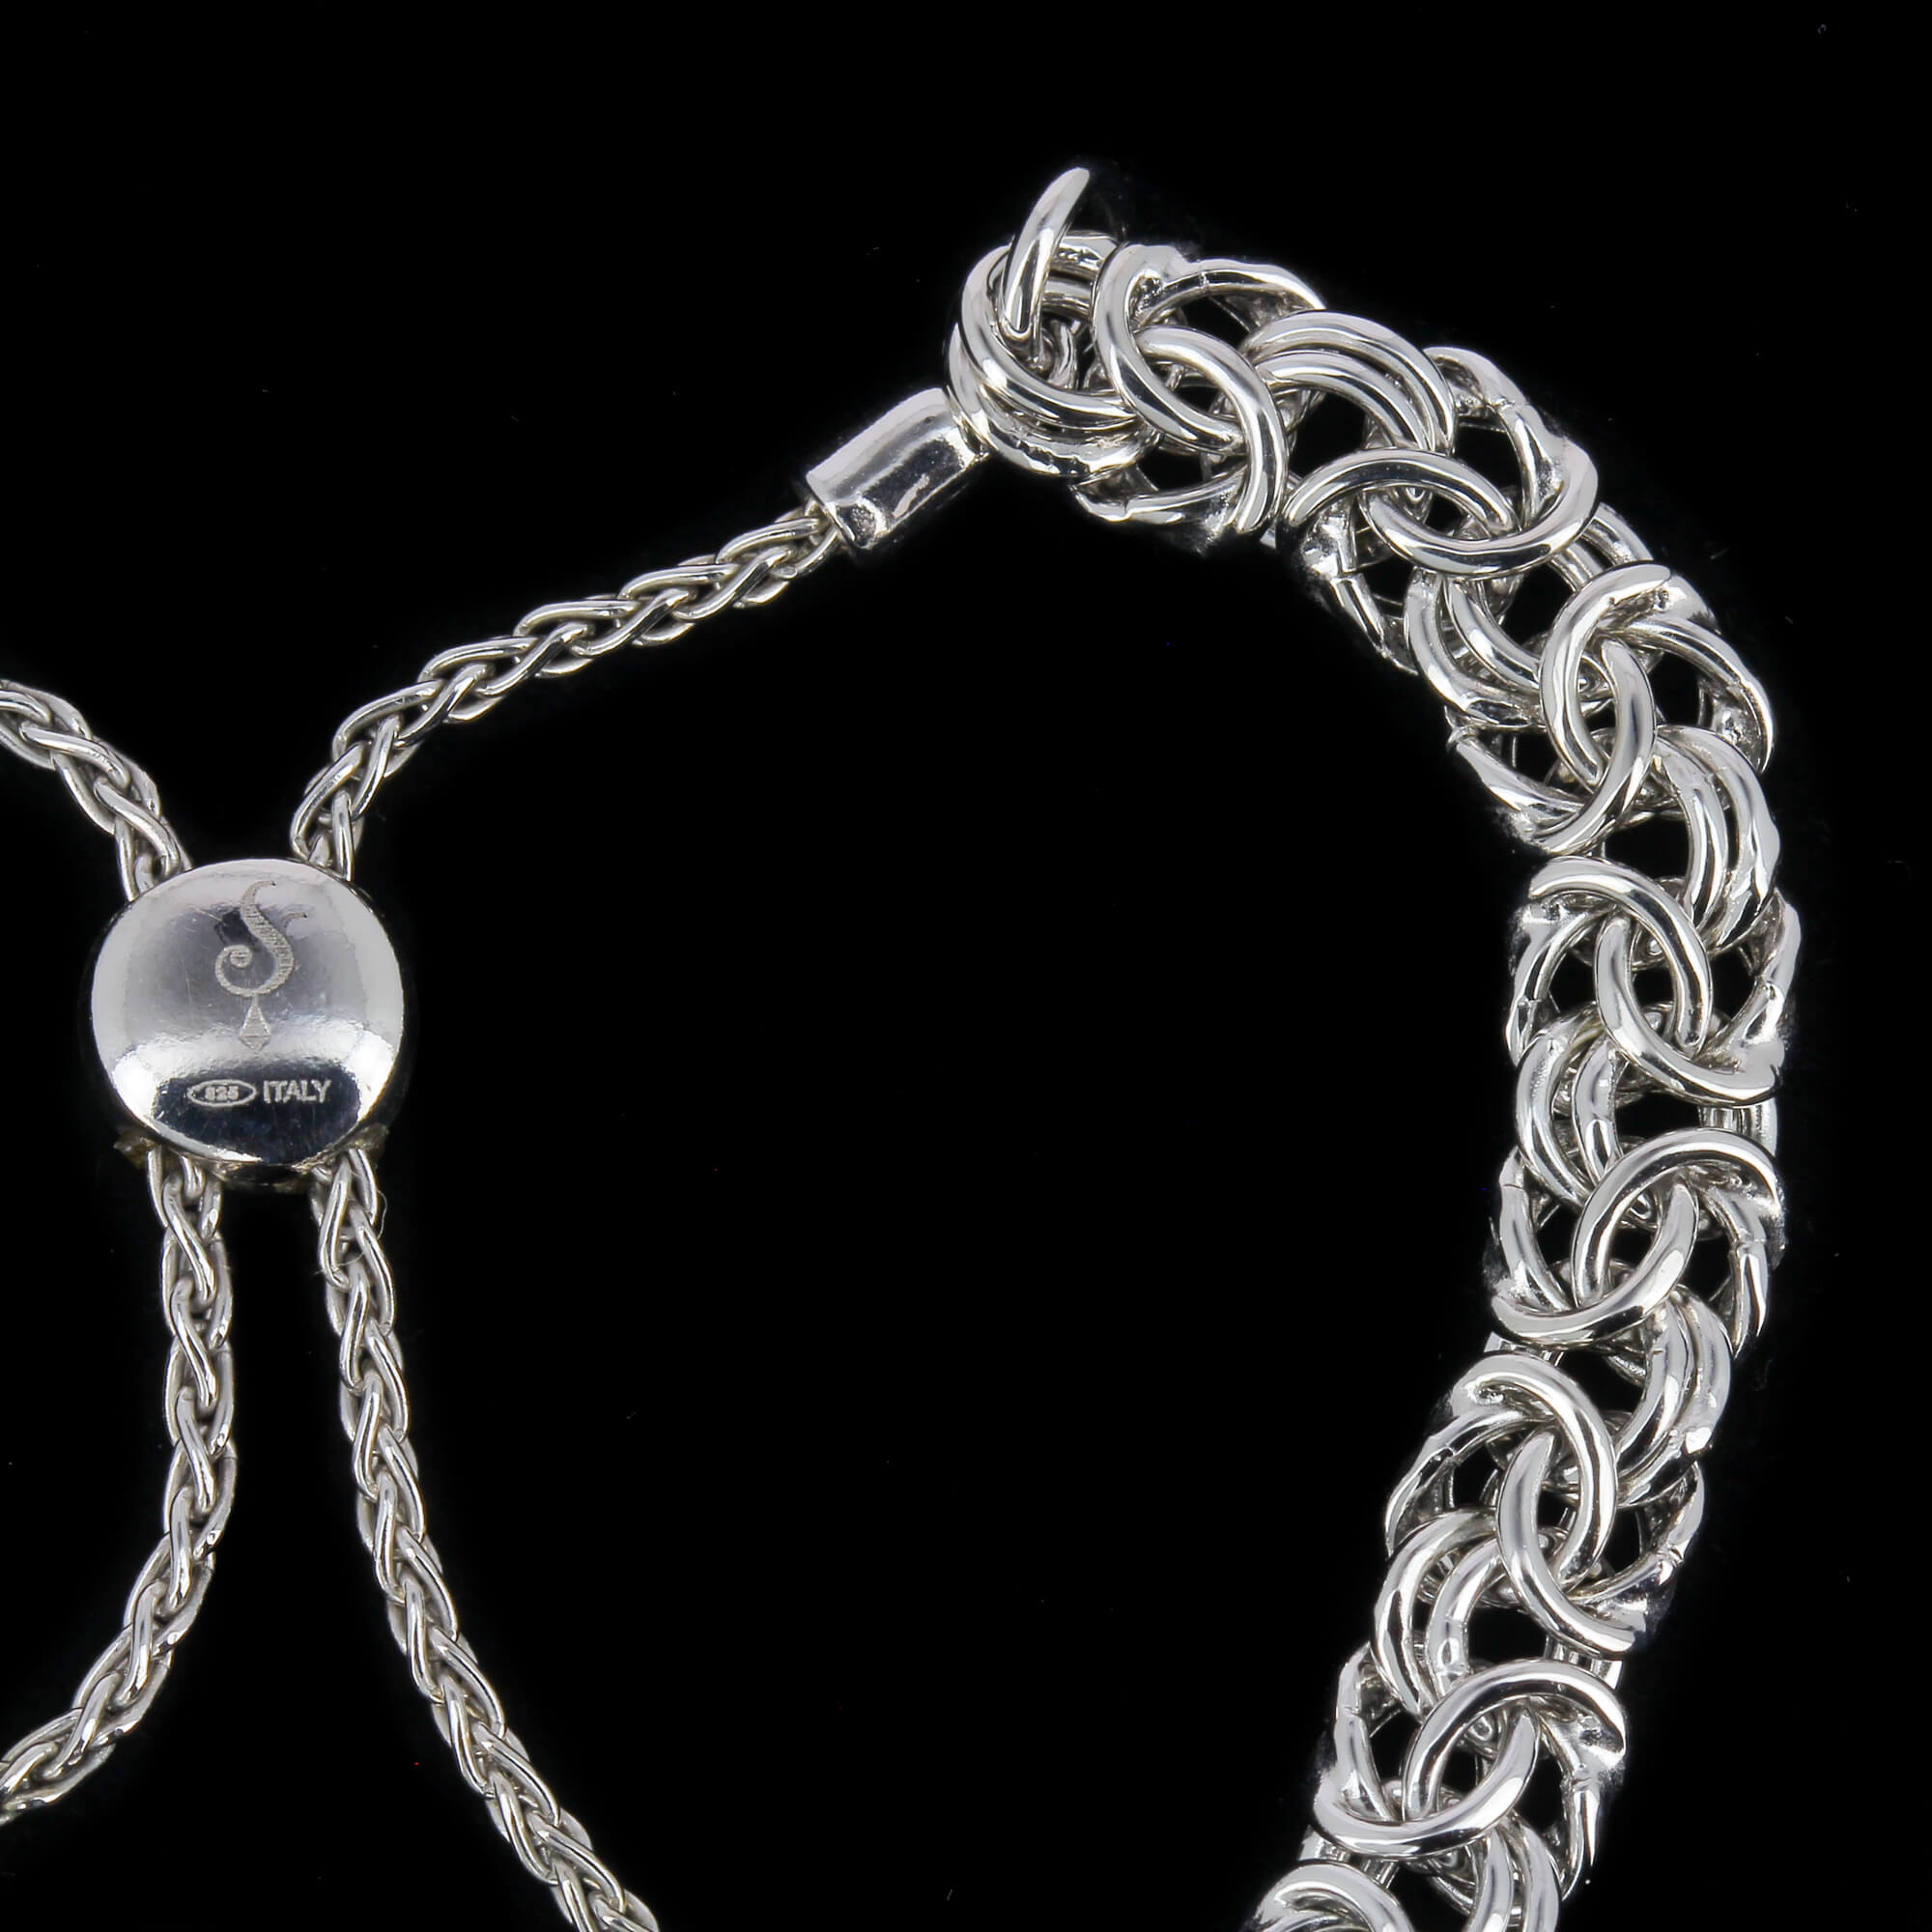 Processed silver bracelet with adjustable lock